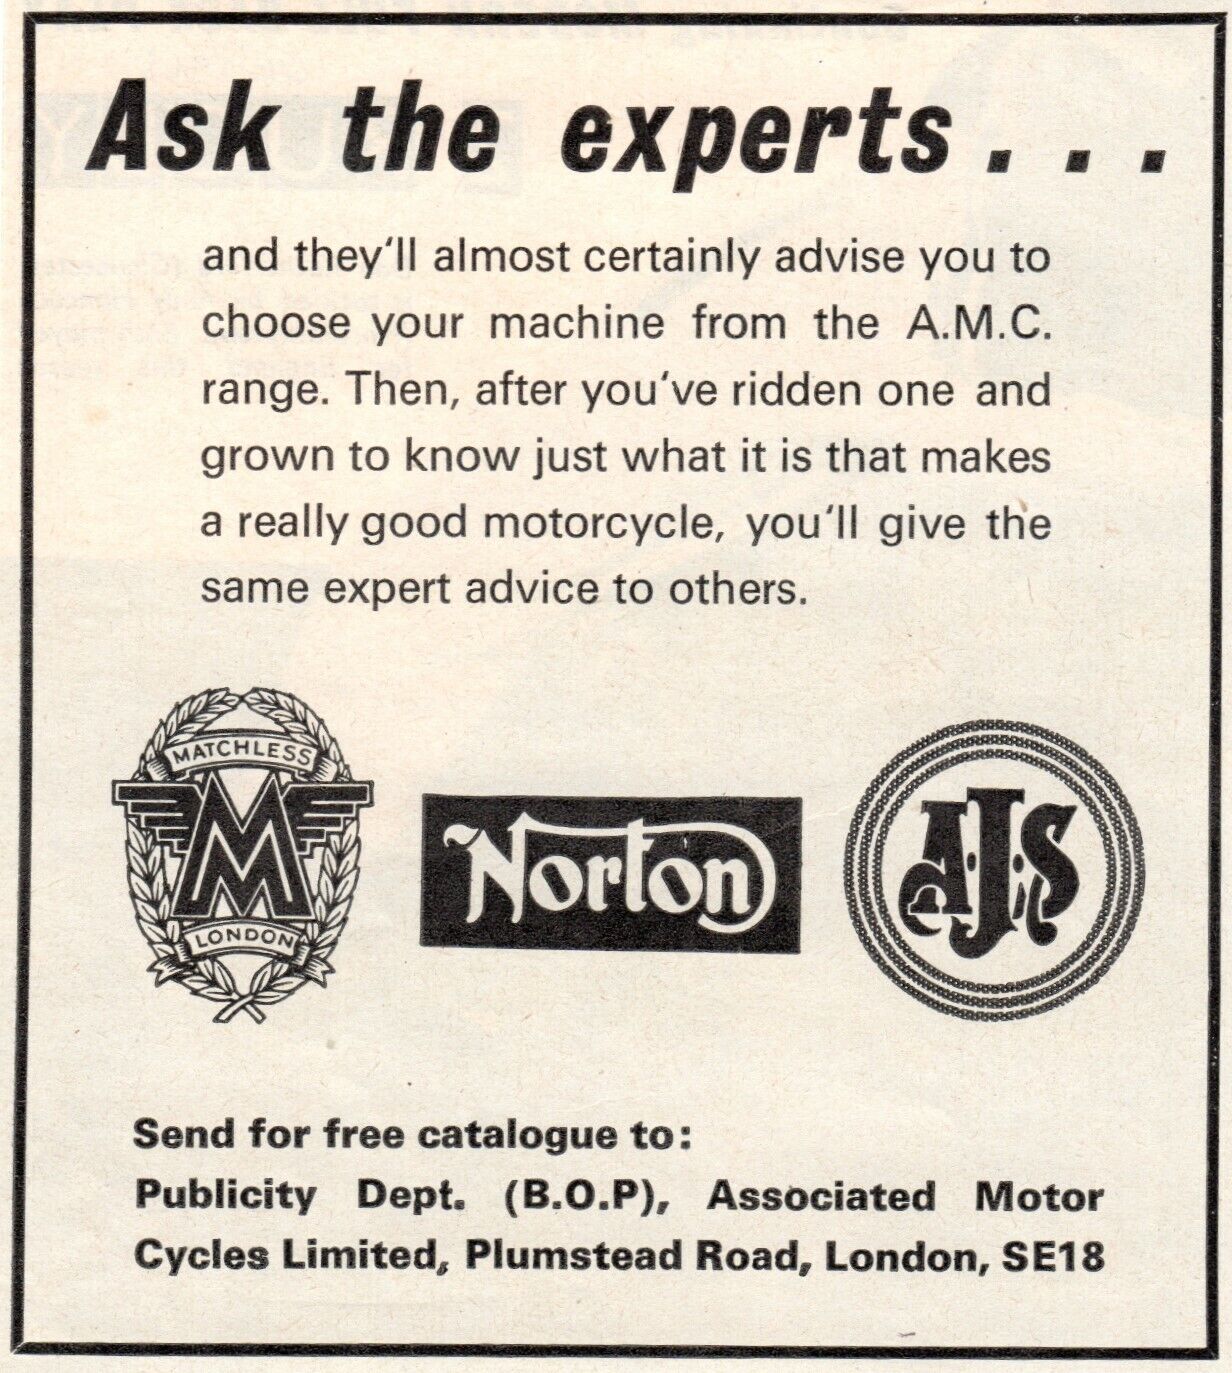 Vintage Associated Motor Cycles Advert - Original 1965 - Matchless/Norton/AJS